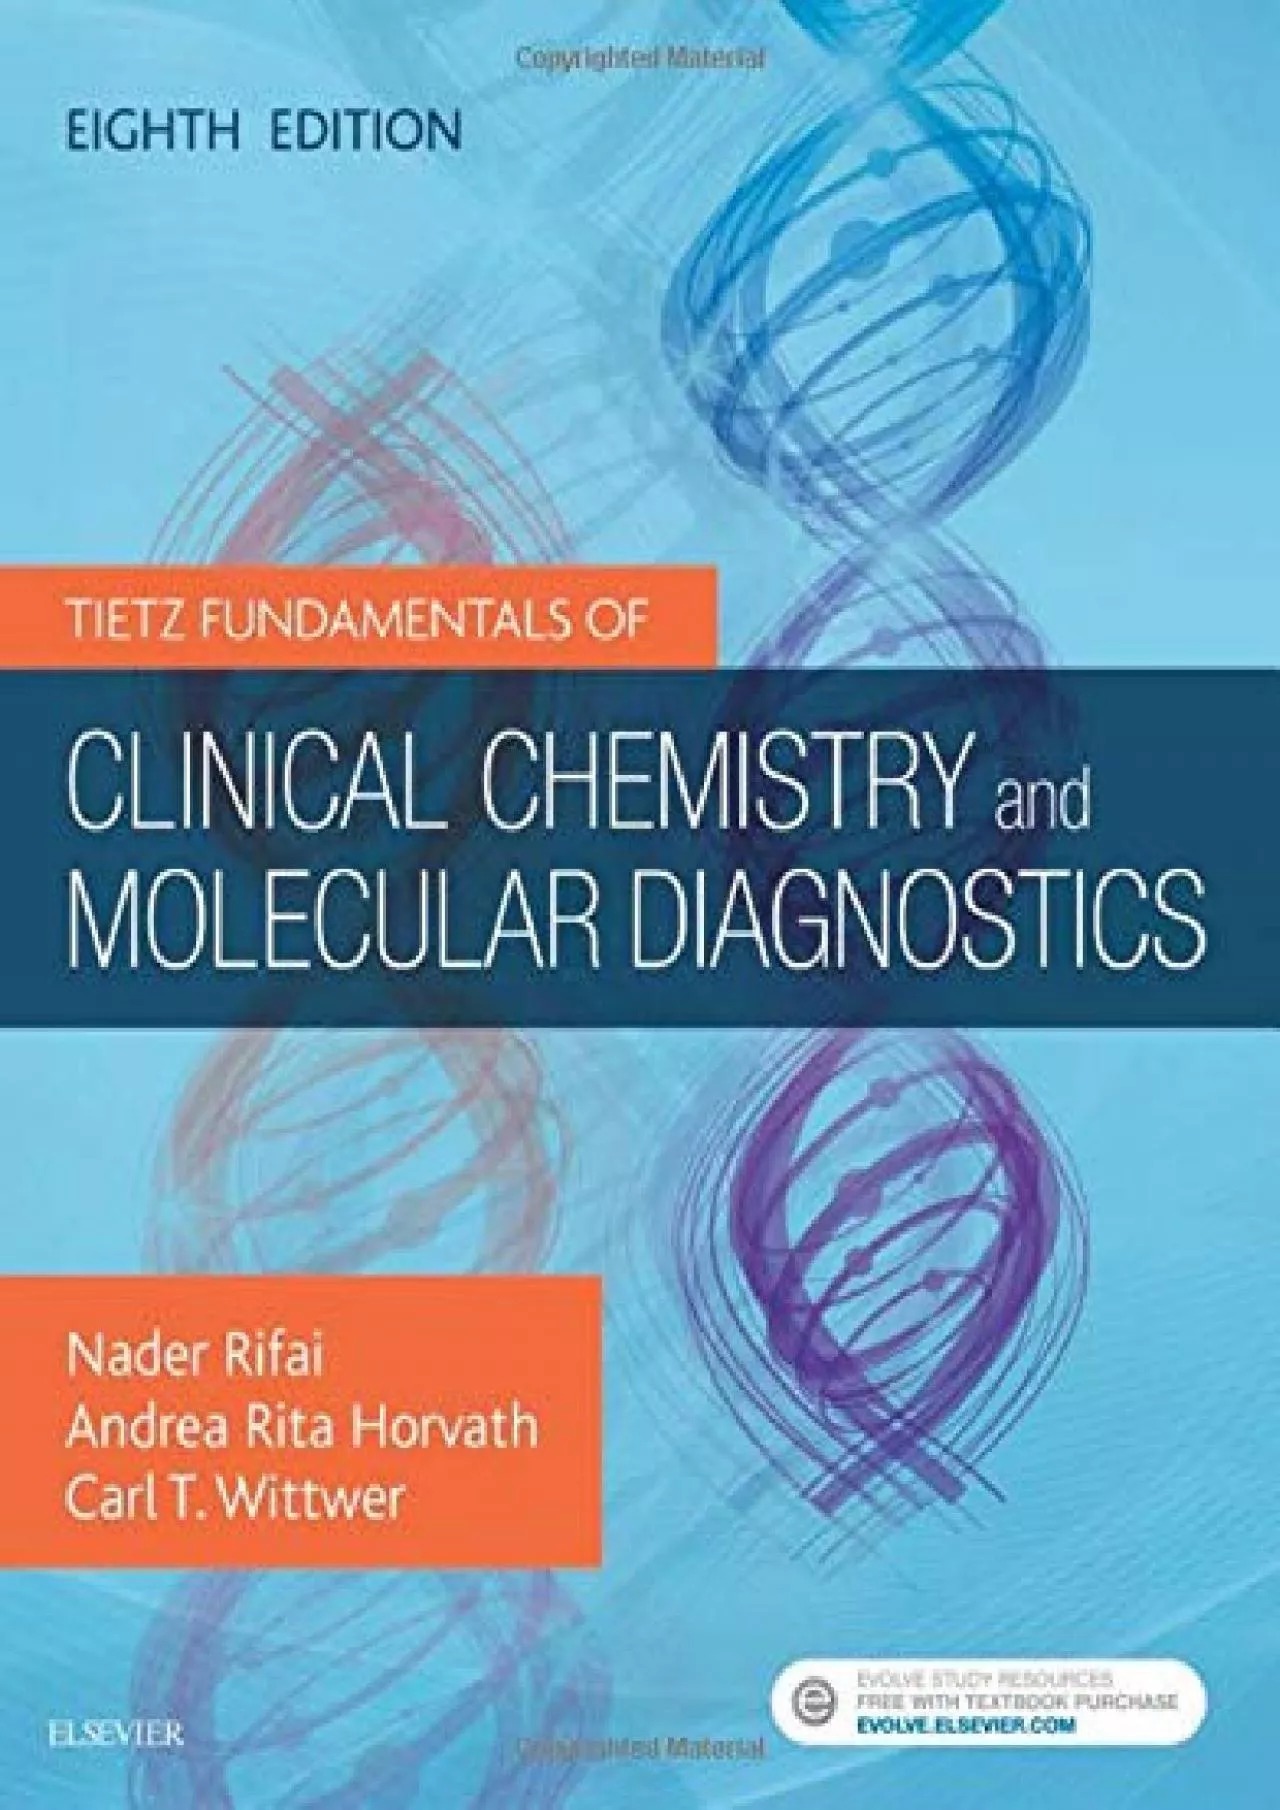 (EBOOK)-Tietz Fundamentals of Clinical Chemistry and Molecular Diagnostics